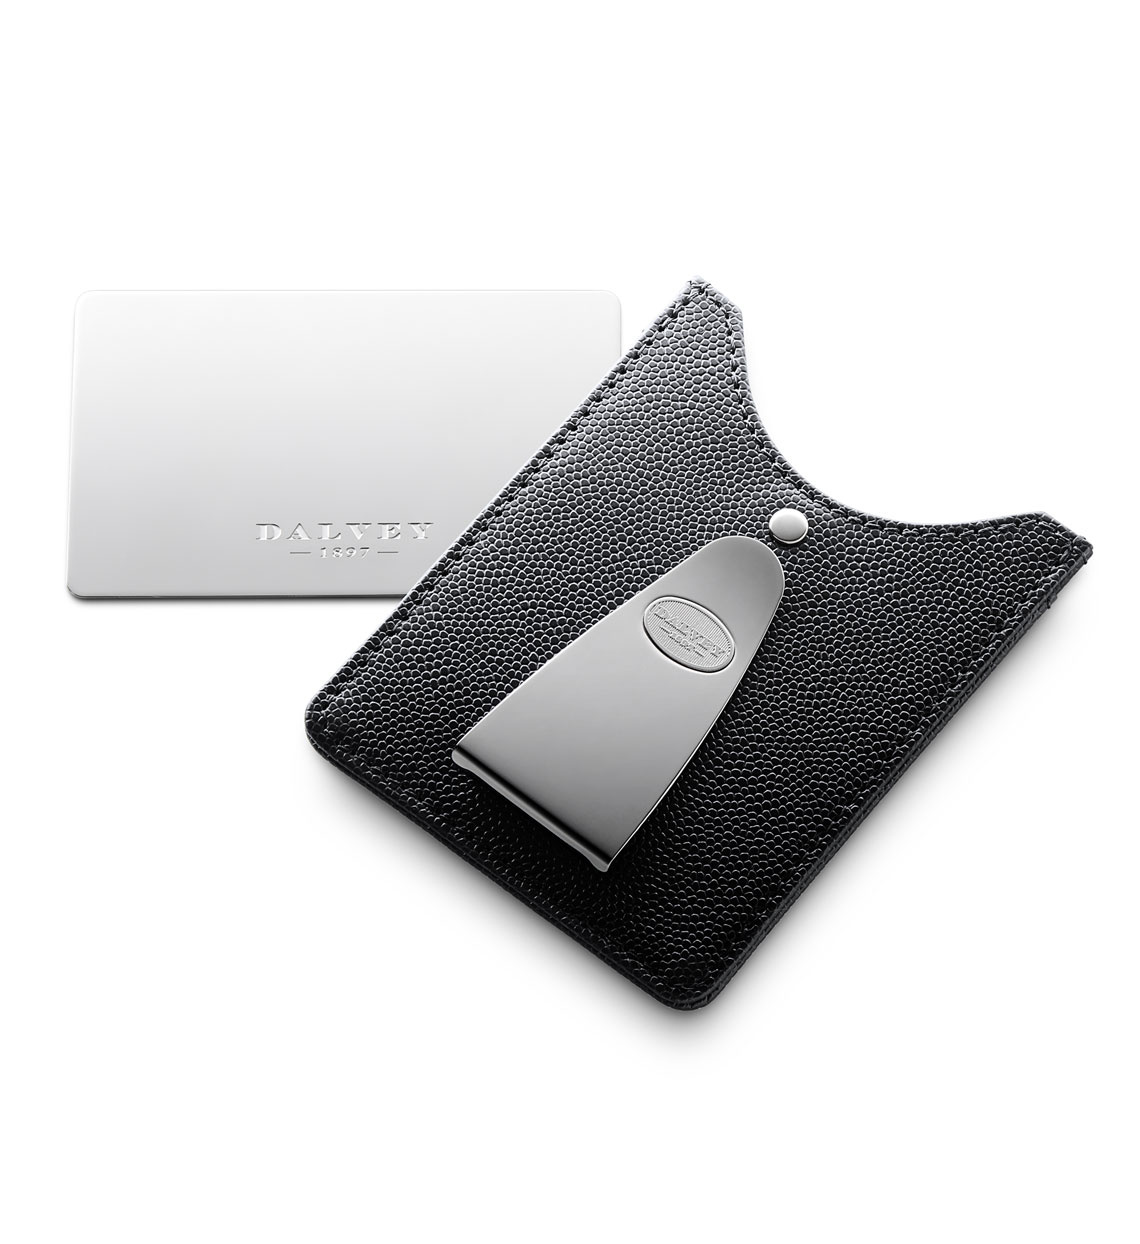 Stainless Steel Clip Fashion Slim Money Clip Credit Card Holder Wallet White